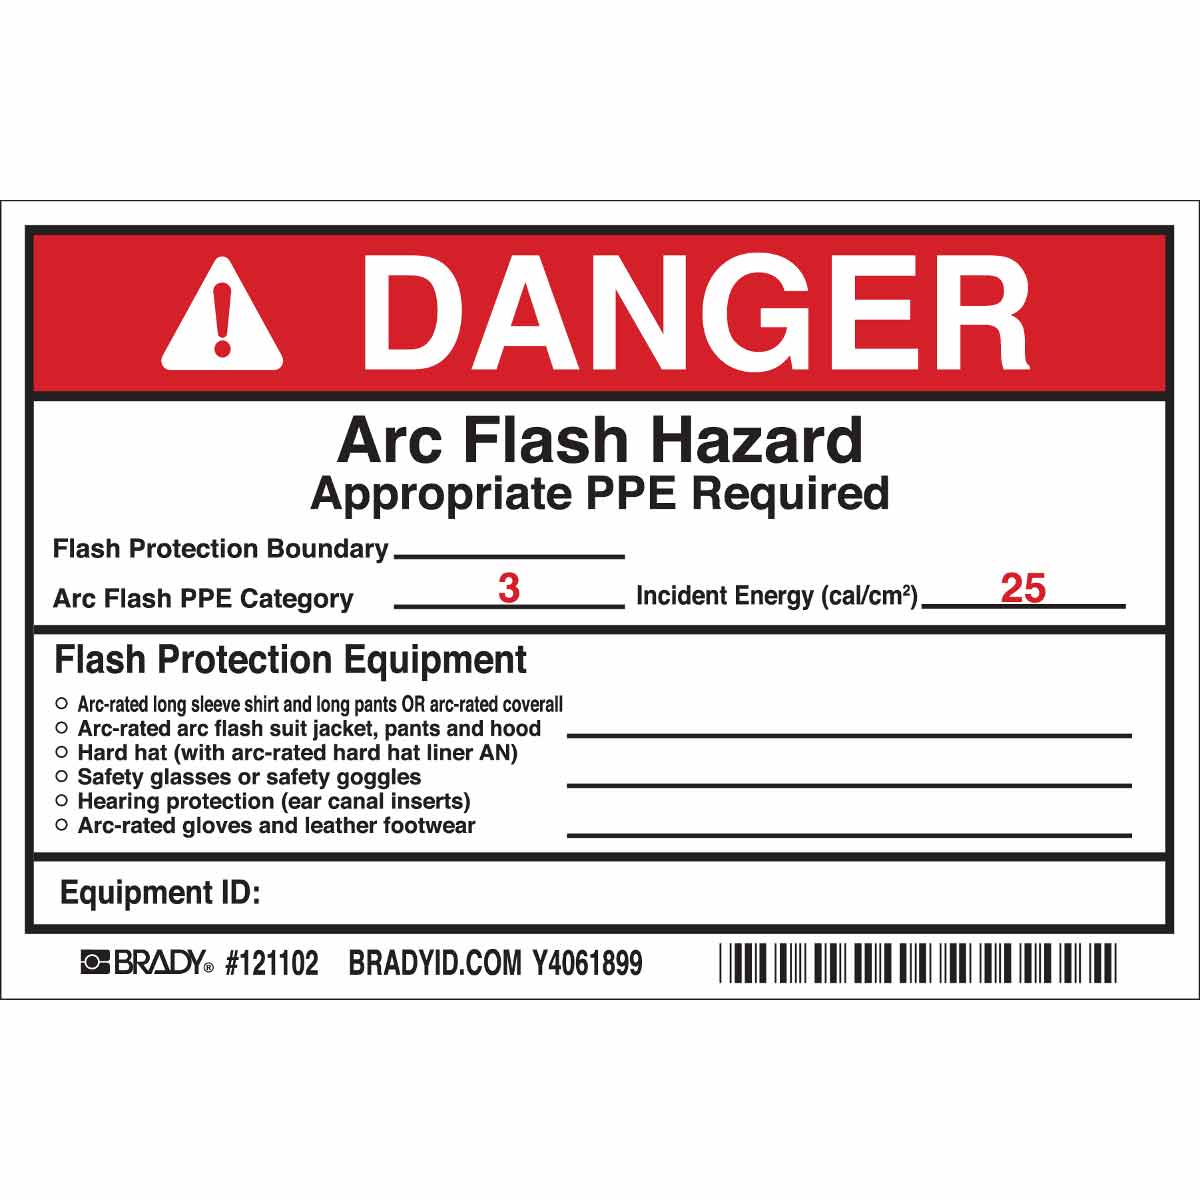 arc flash boundary Dc incident energy Ed